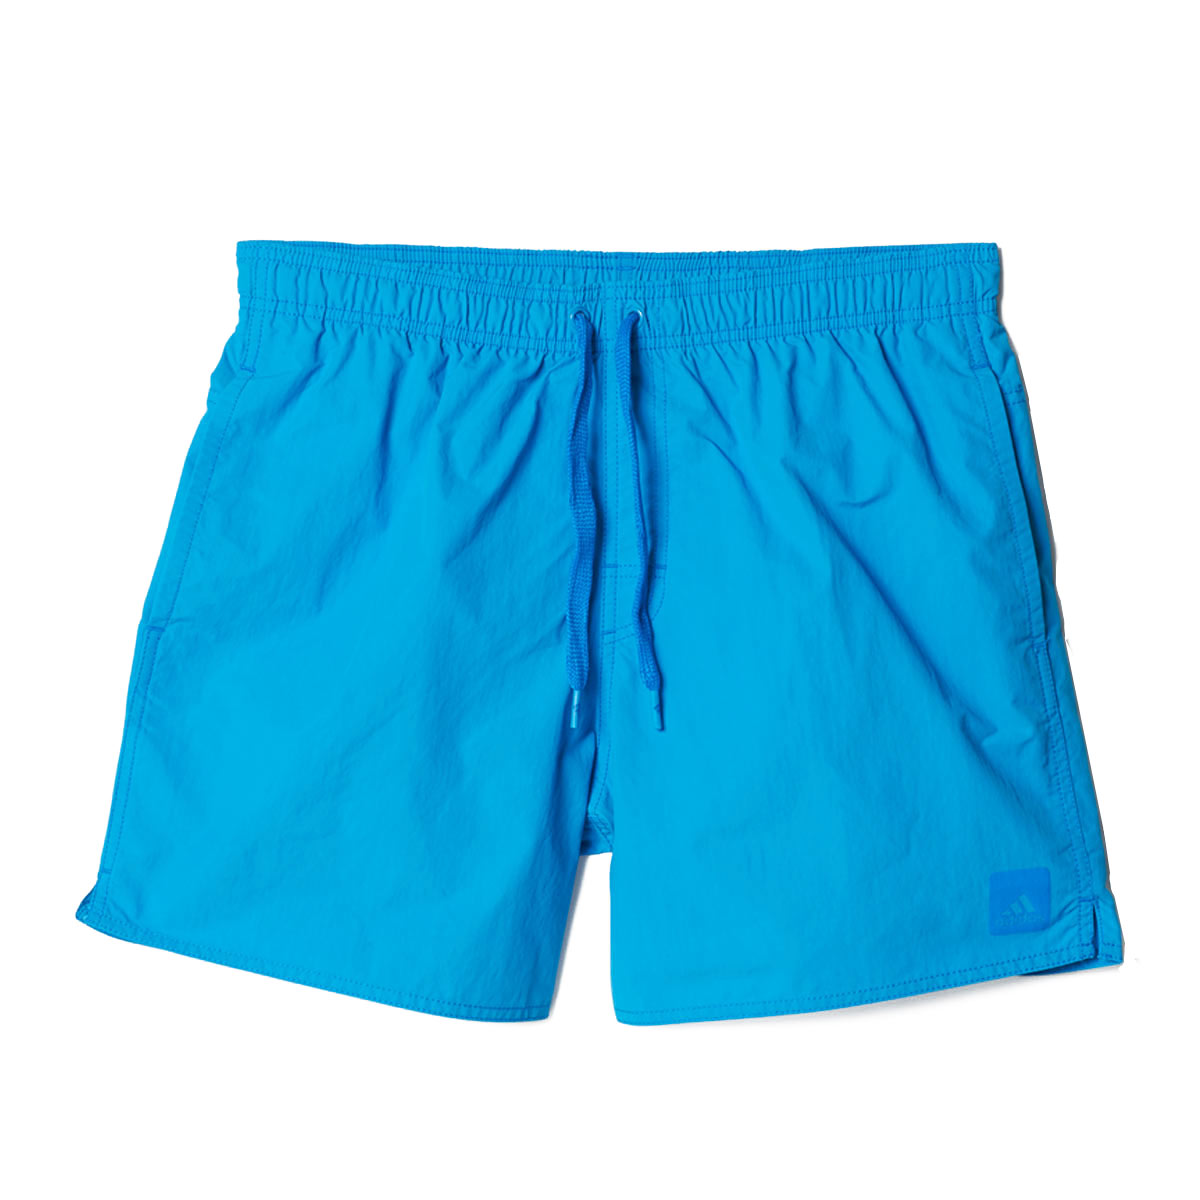 Adidas Men's Solid Shorts - Solar Blue / Shock Blue